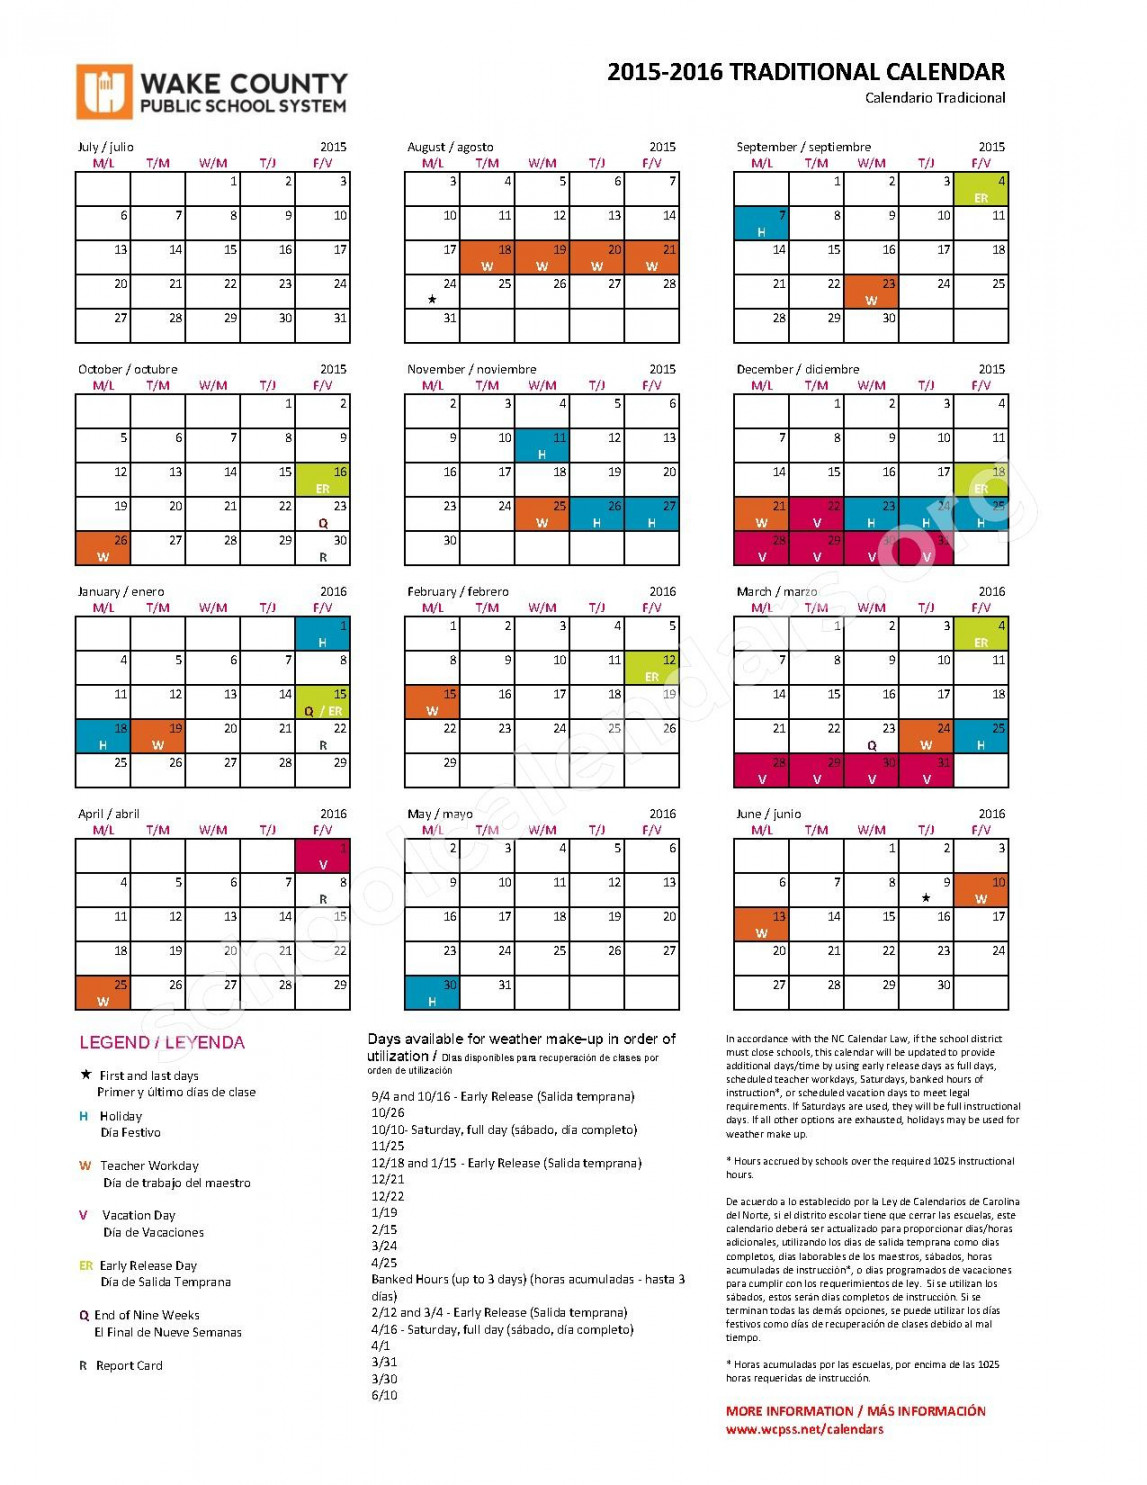 Wake County Calendar -